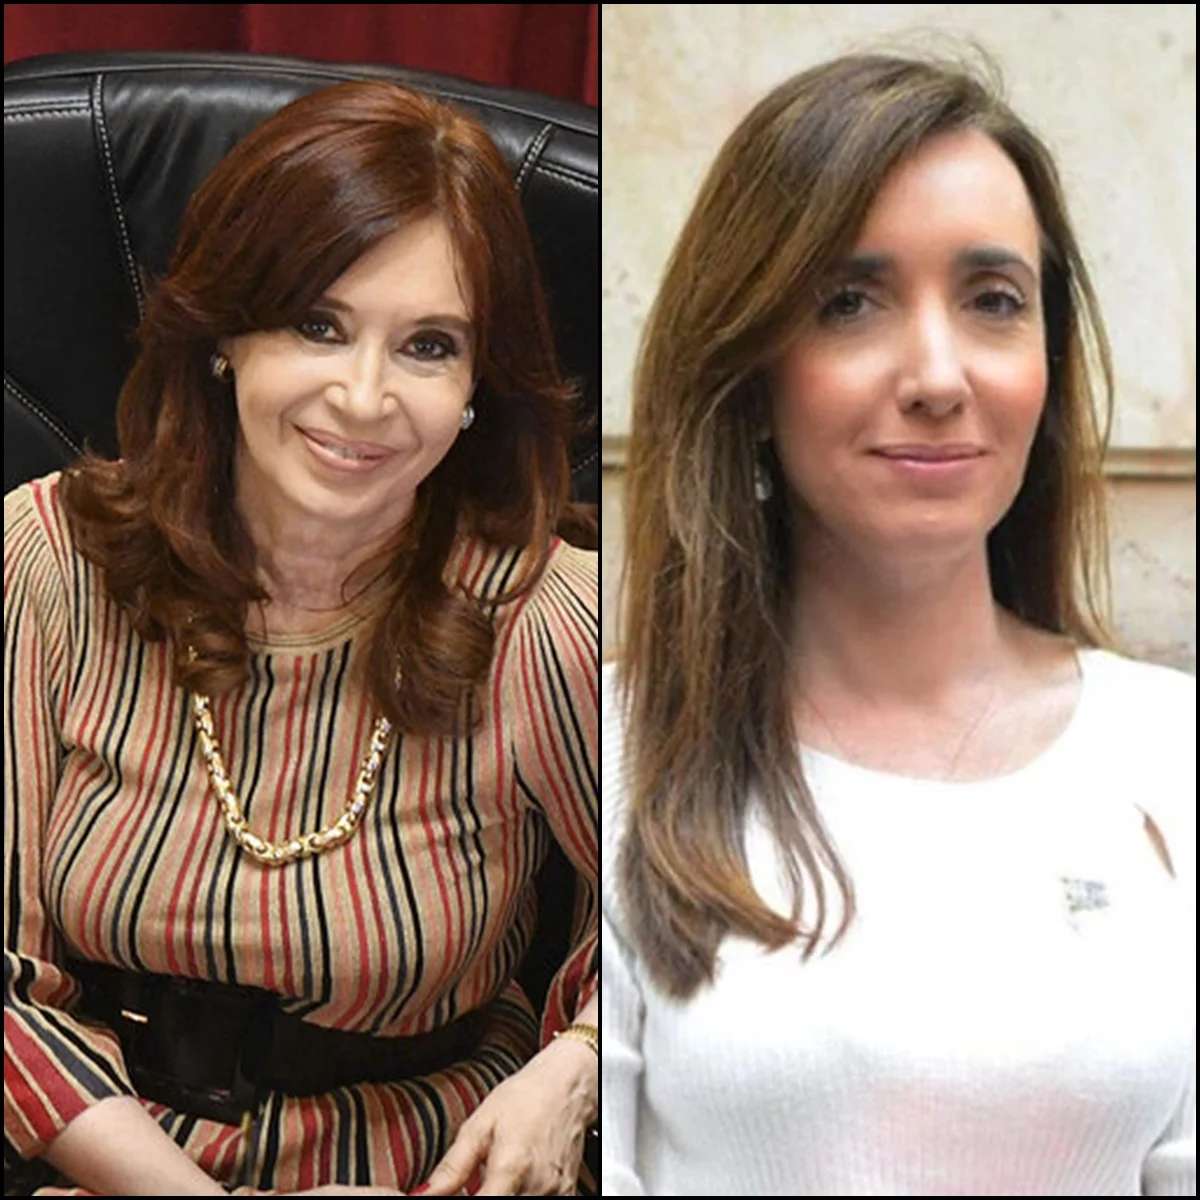 Victoria Villarruel se reunió con Cristina Kirchner: “Vamos a llevar una transición ordenada”